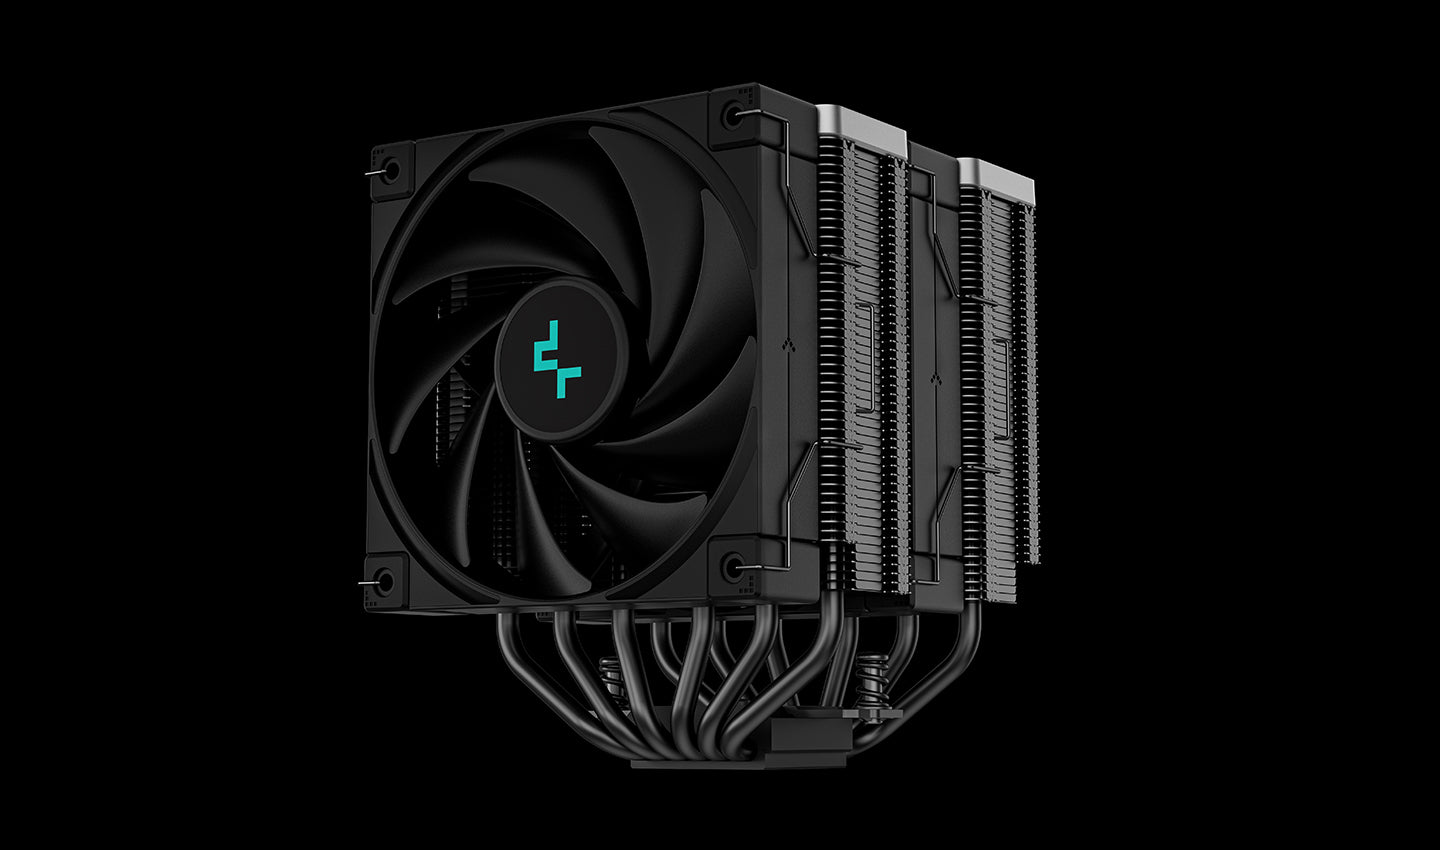 DeepCool AK620 Black/ White / Zero Dark, Dual Tower CPU Air Cooler